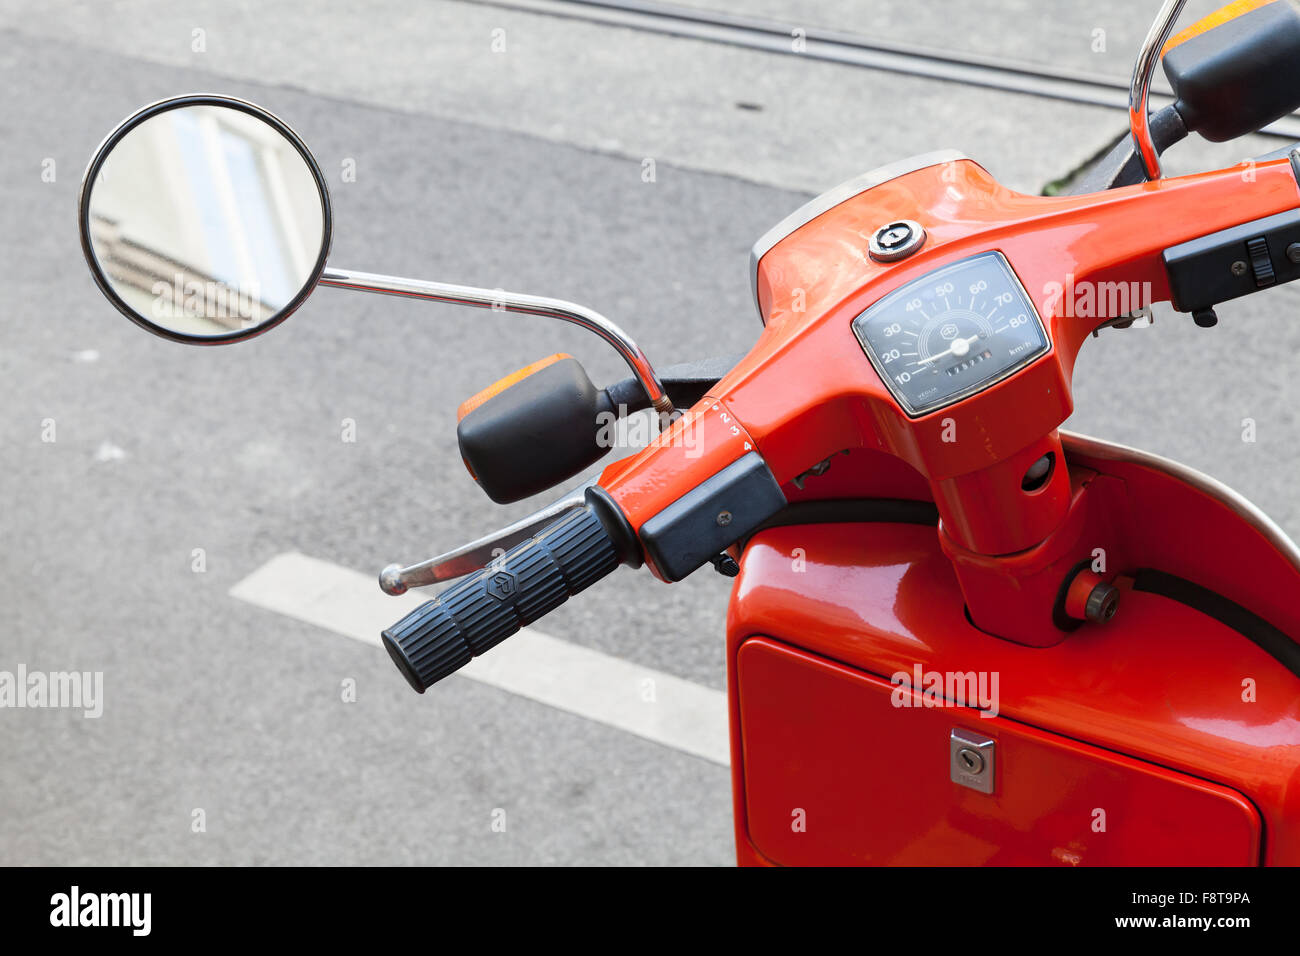 Vienna, Austria - November 4, 2015: Red classical Italian Piaggio scooter handlebar with speedometer and mirror Stock Photo